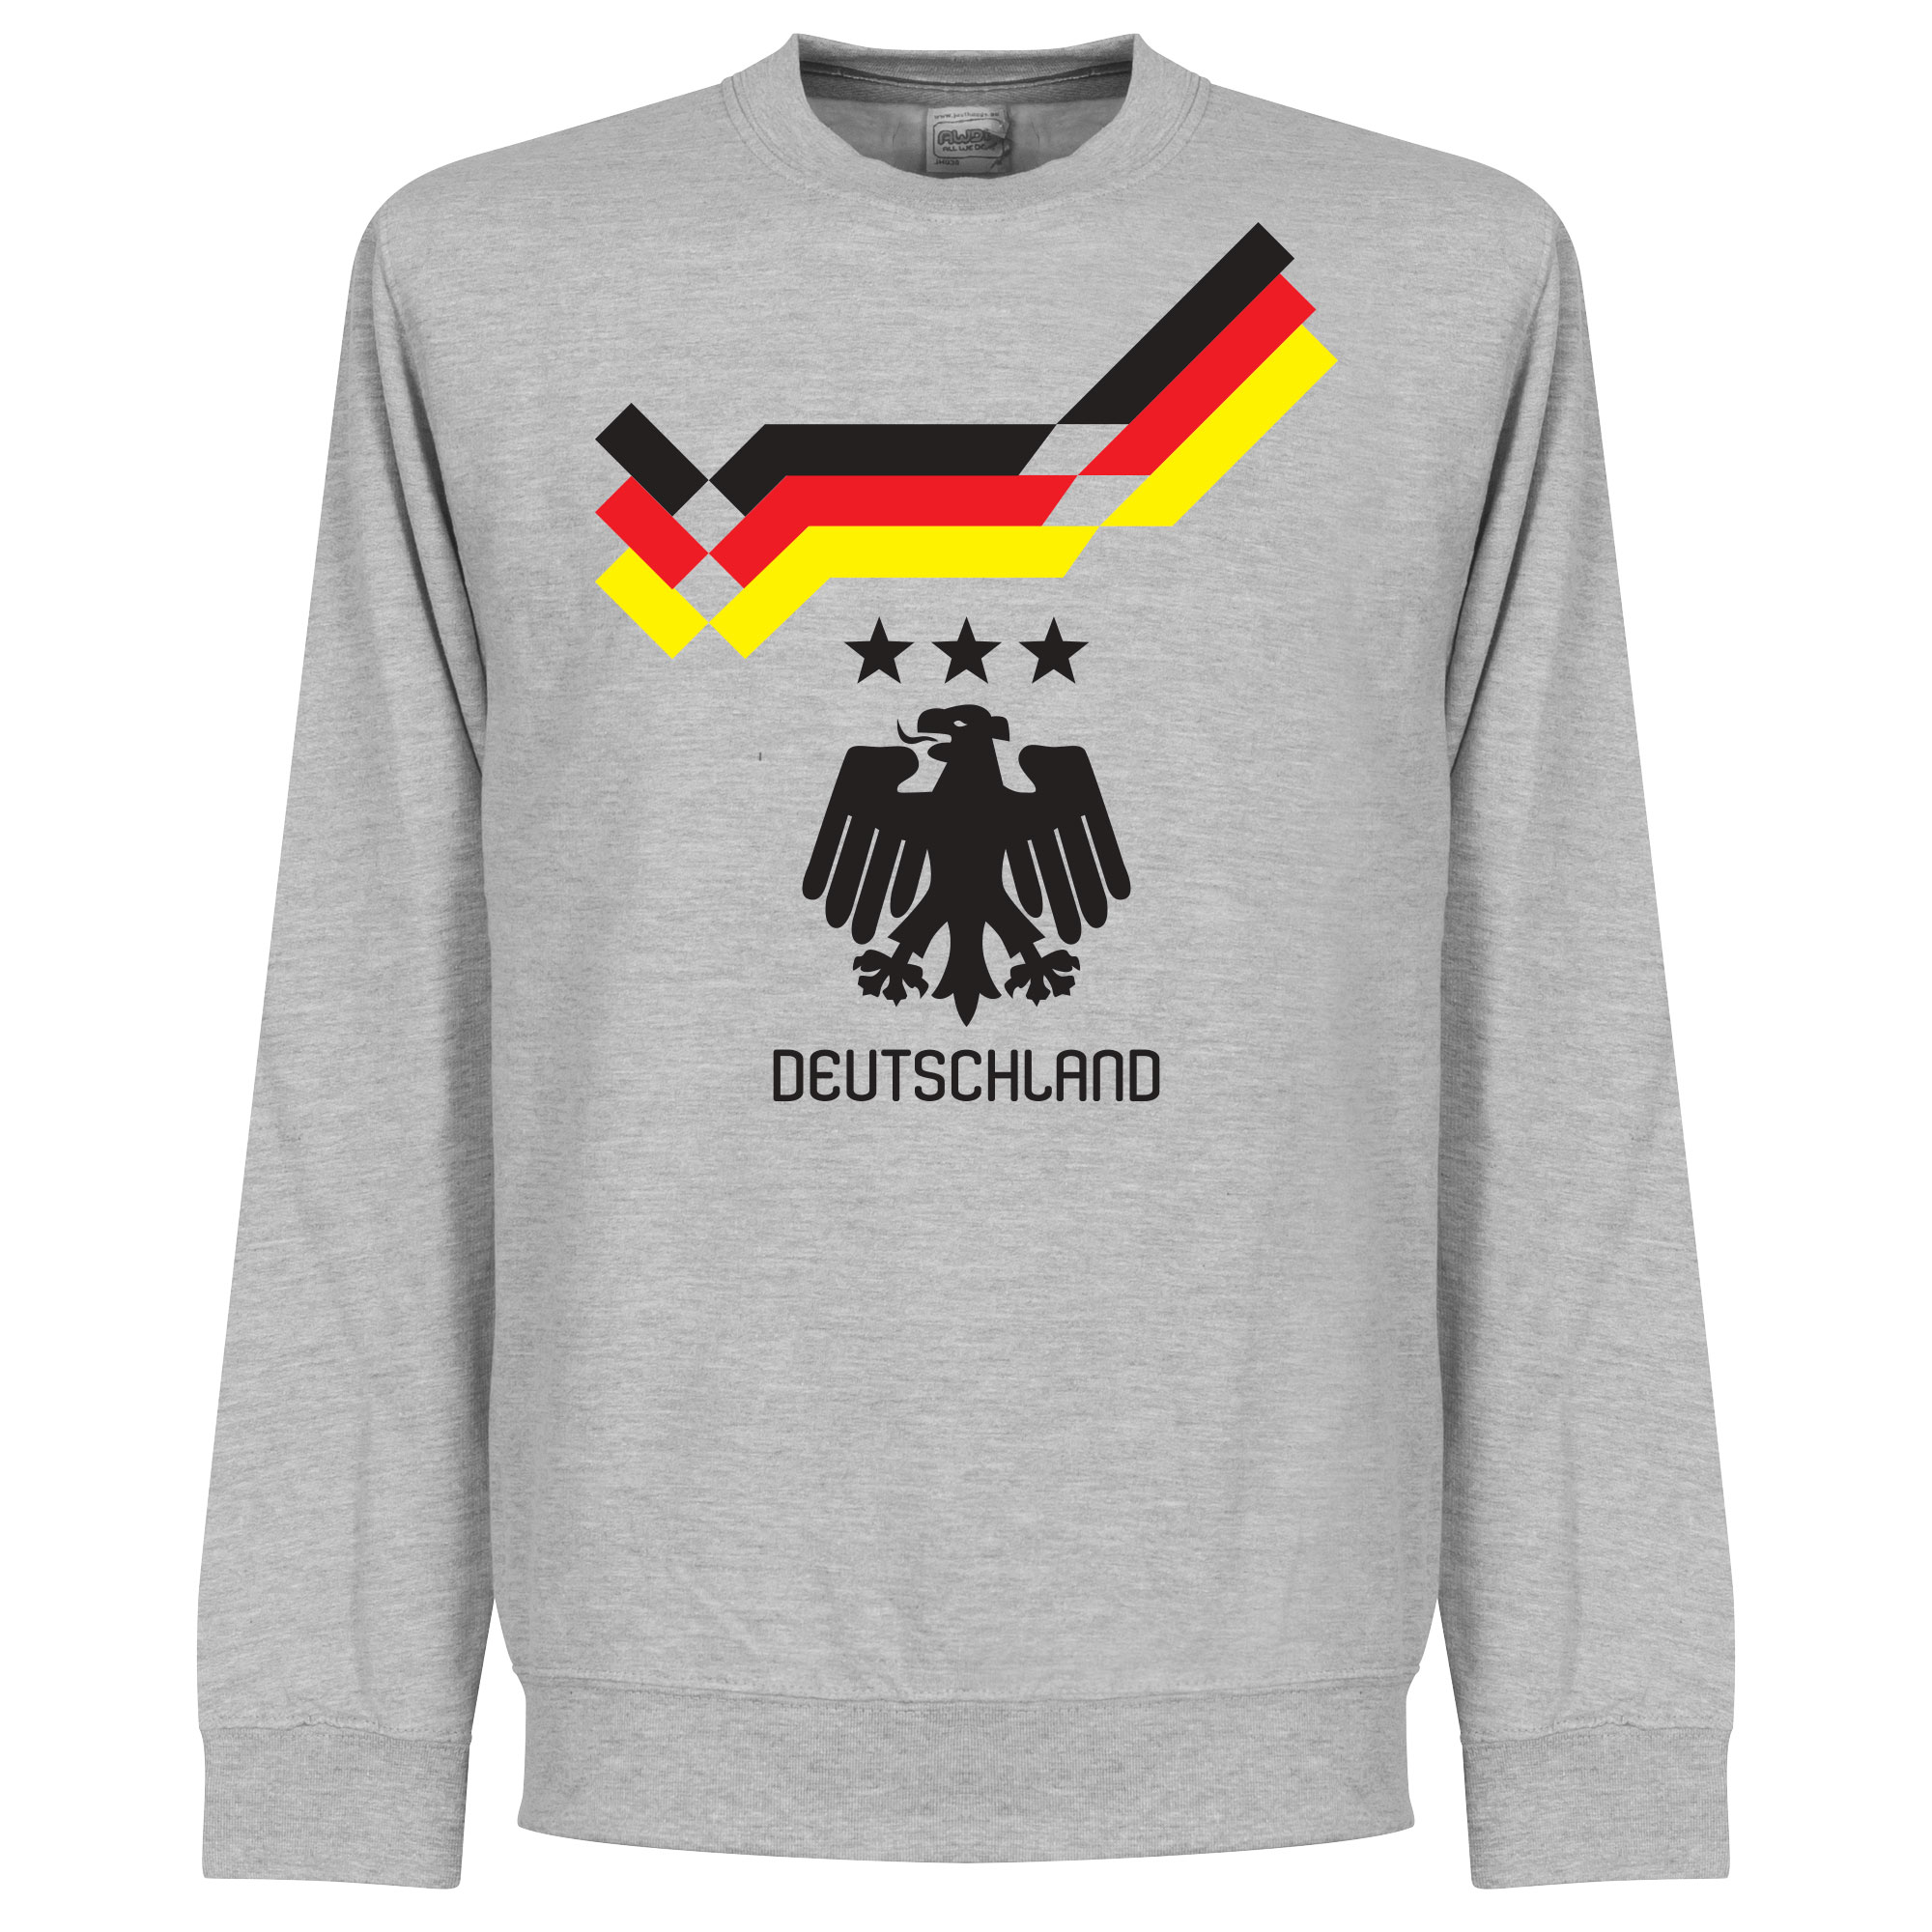 Duitsland 1990 Retro Sweater - XXXL